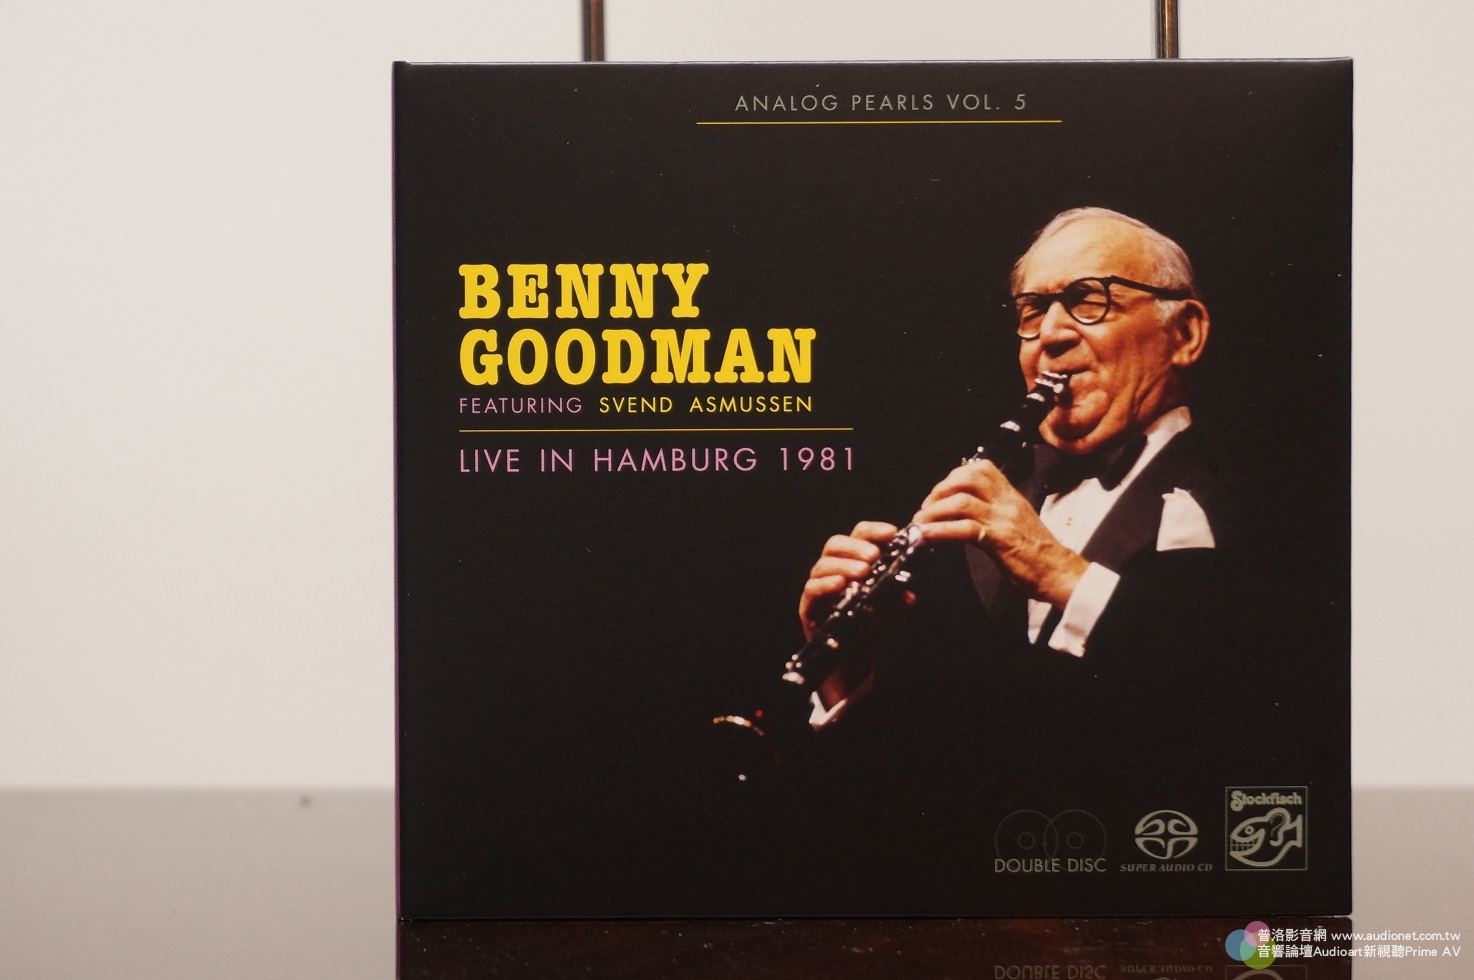 Benny Goodman Live in Hamberg 1981